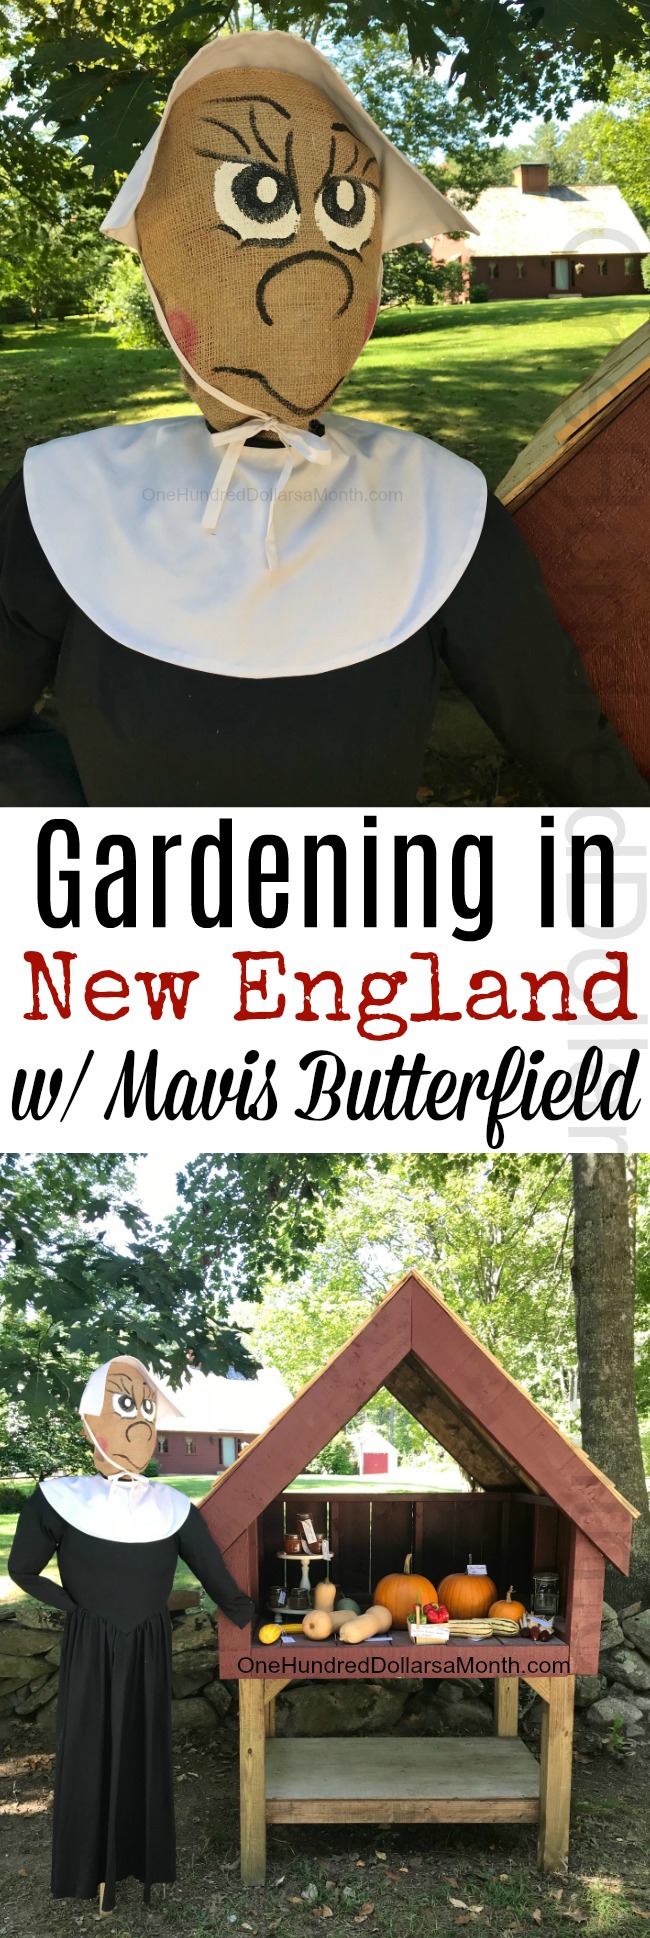 Gardening in New England – New Garden Stand Photos and a Garden Tally Update!